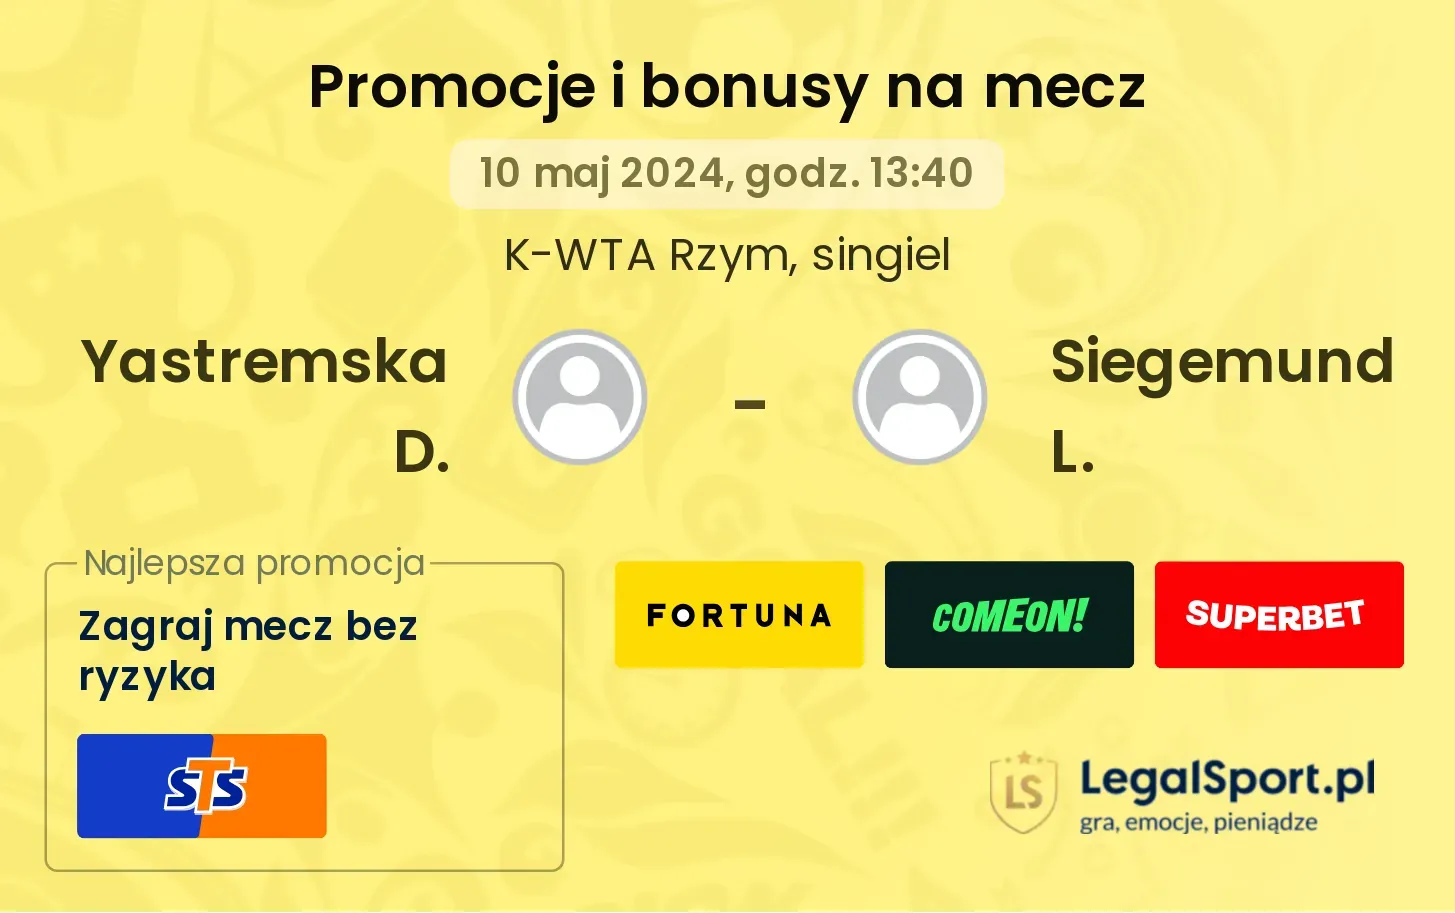 Yastremska D. - Siegemund L. promocje bonusy na mecz